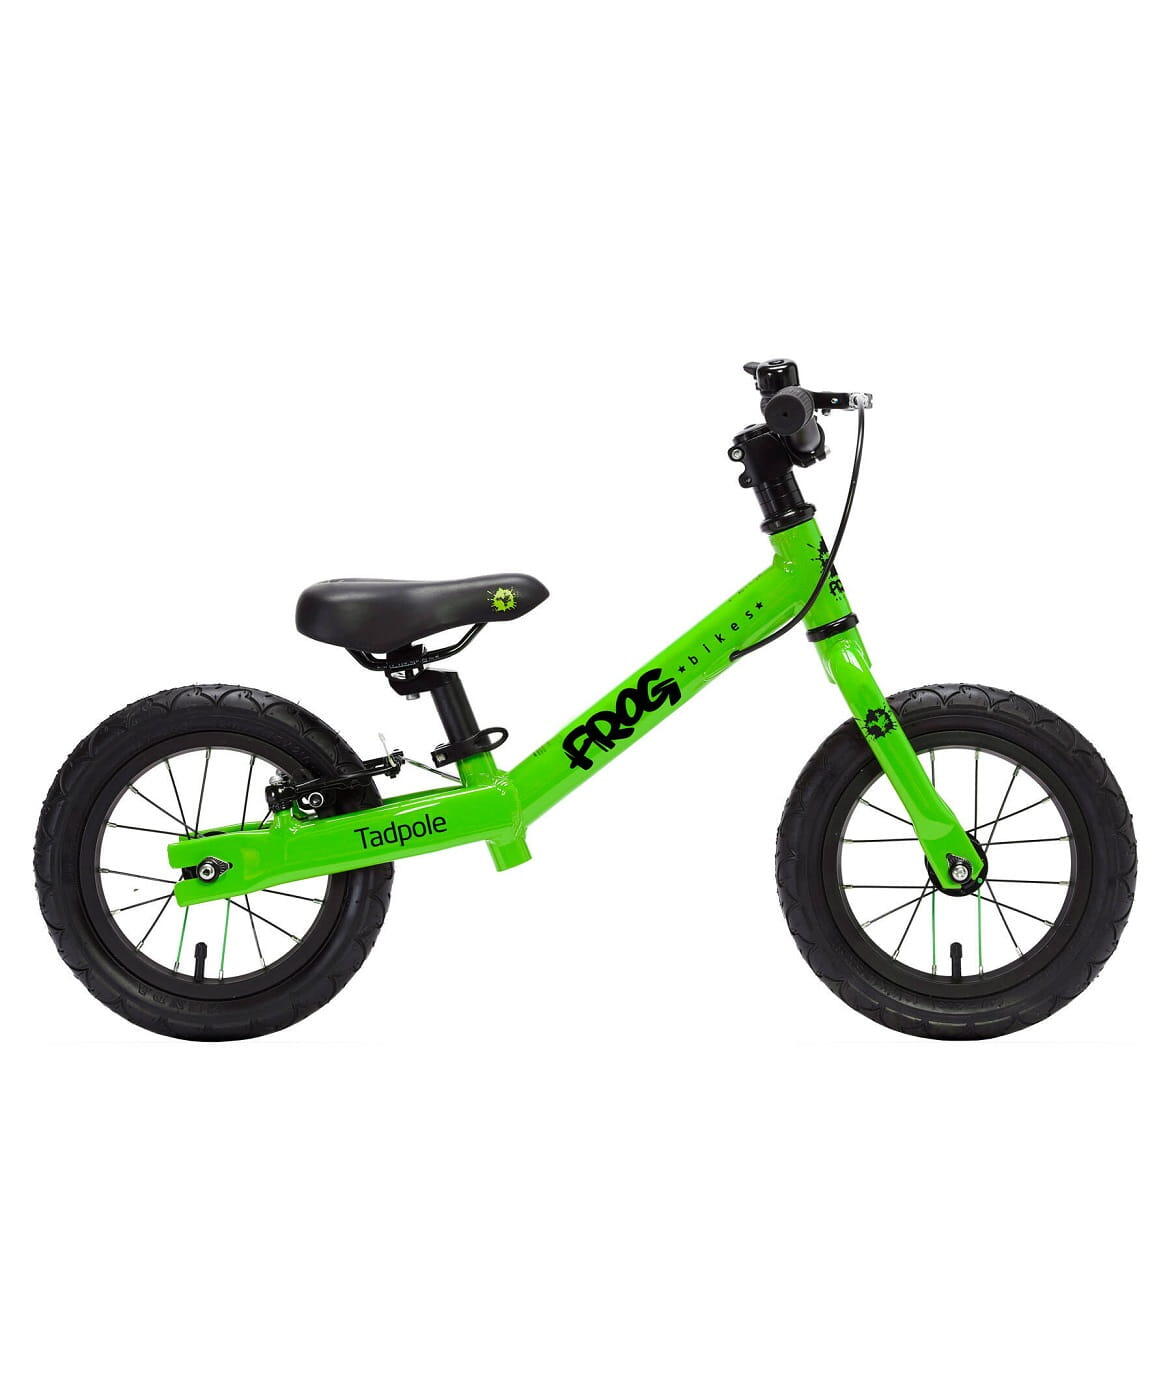 FROG BIKES Tadpole 12 Inch Lightweight Kids Balance Bike For 2-3 Years - Green